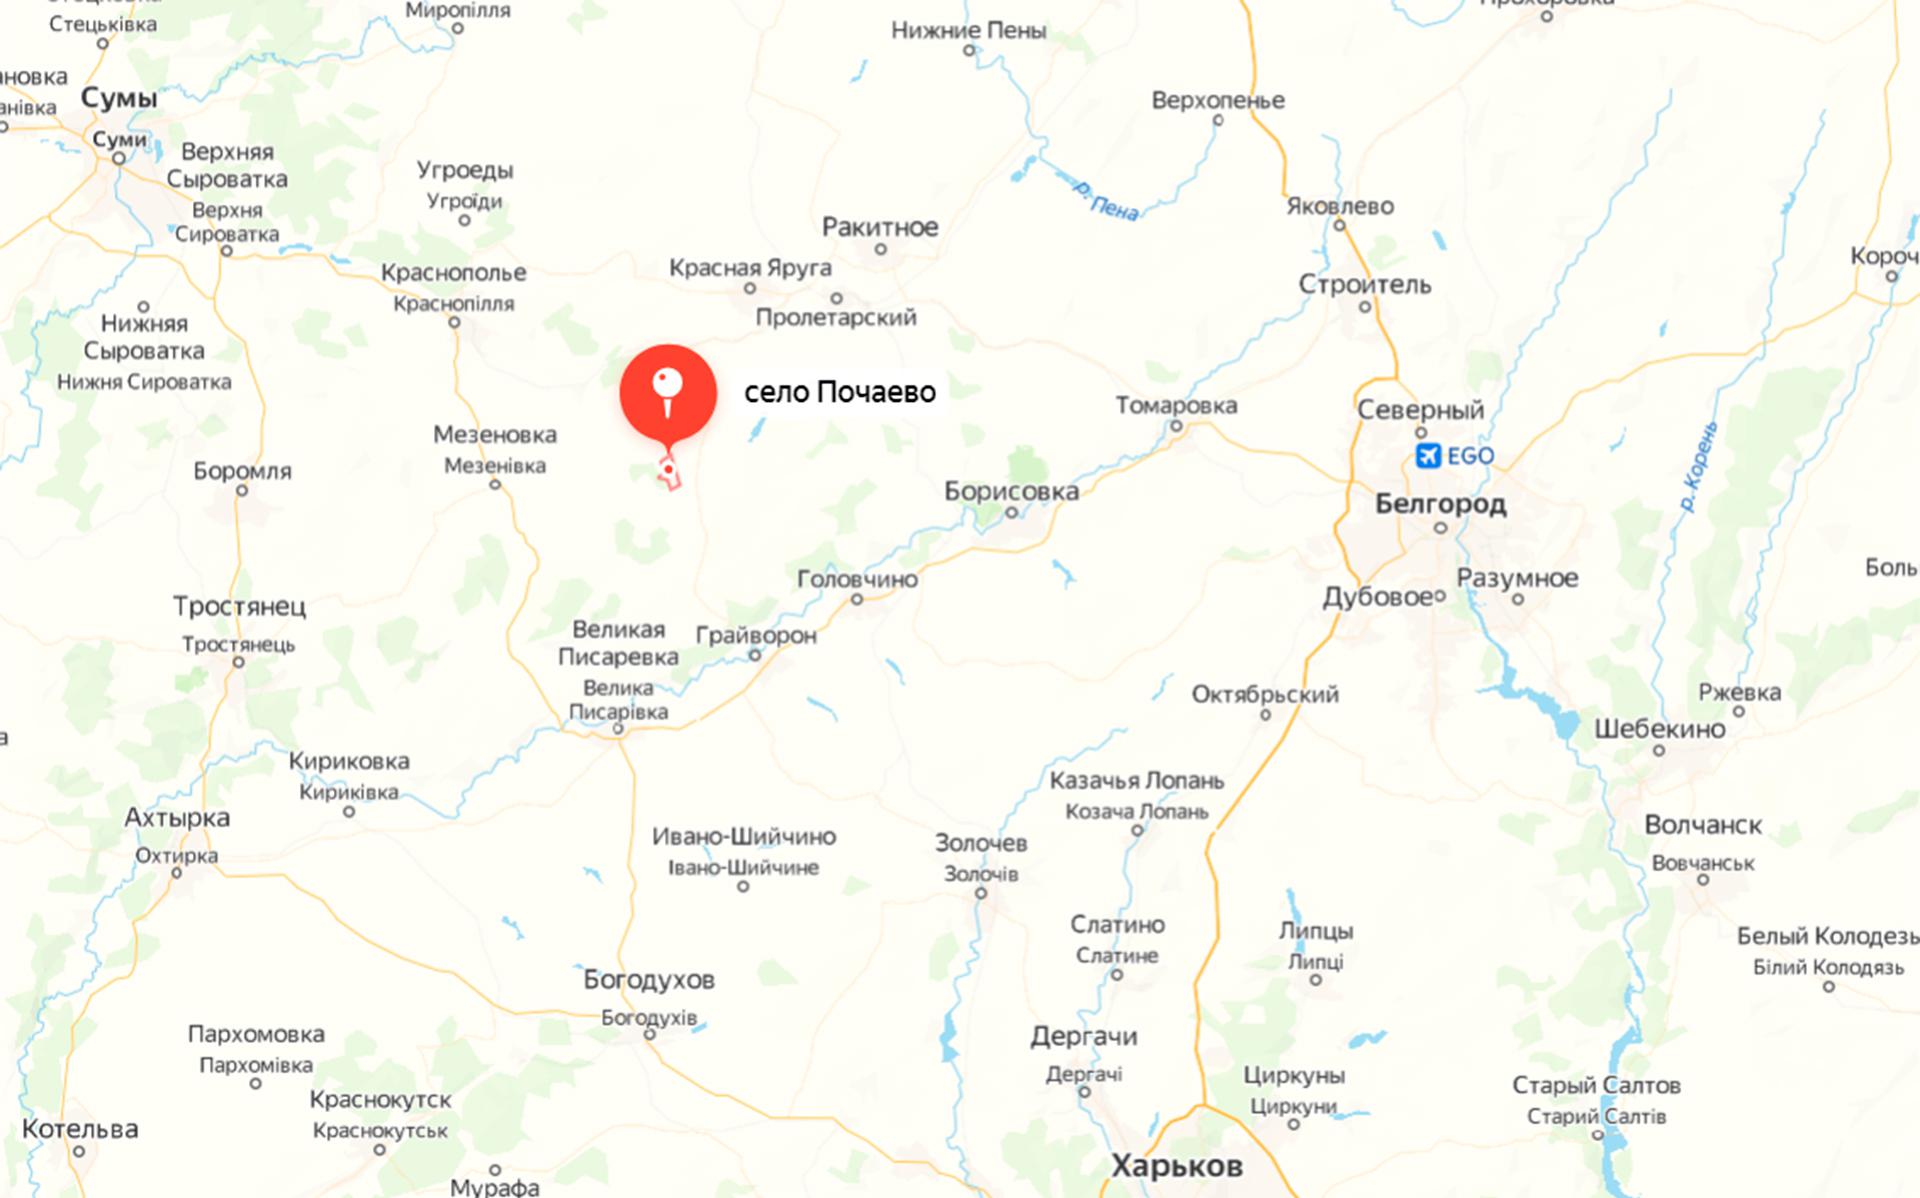 Три человека погибли от удара дрона по белгородскому селу Почаево